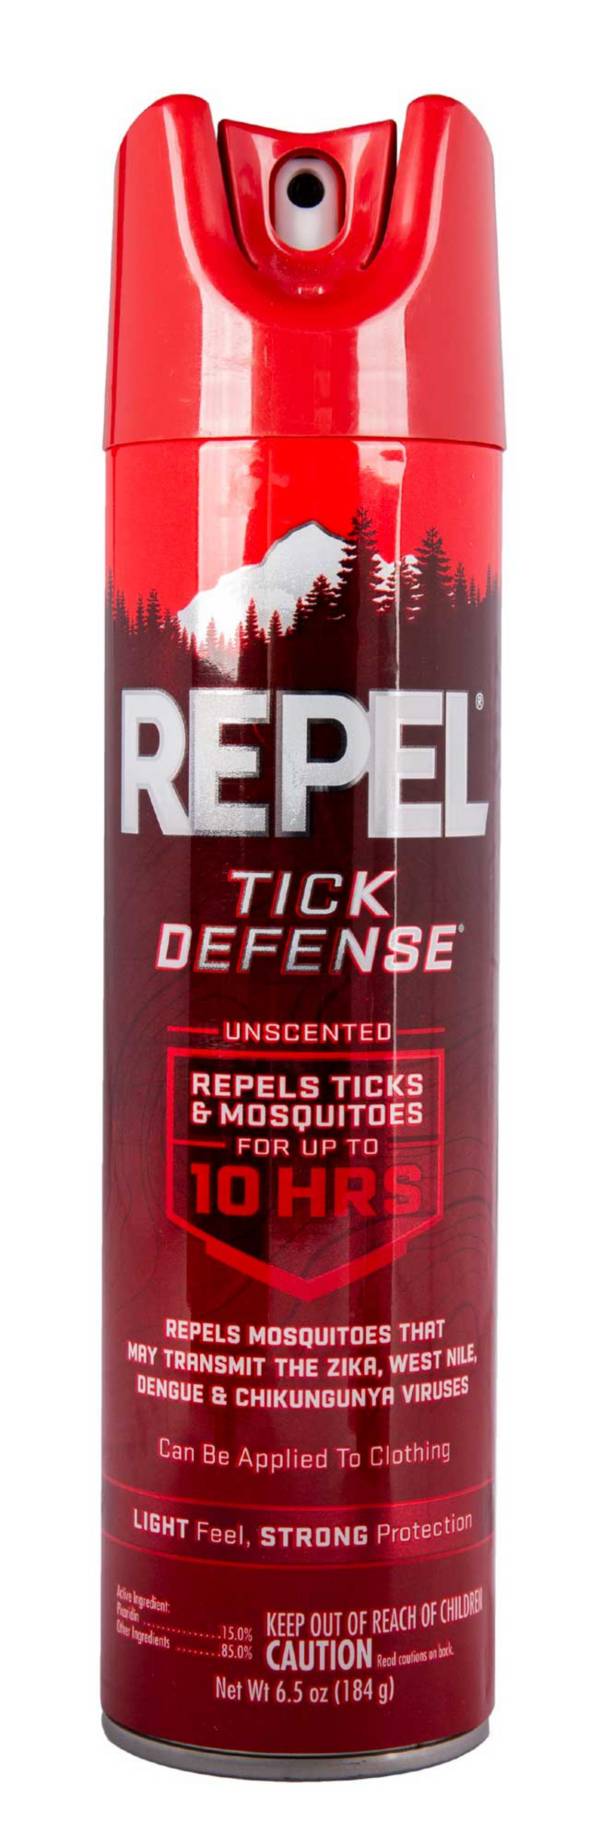 Repel Tick Defense Aerosol product image